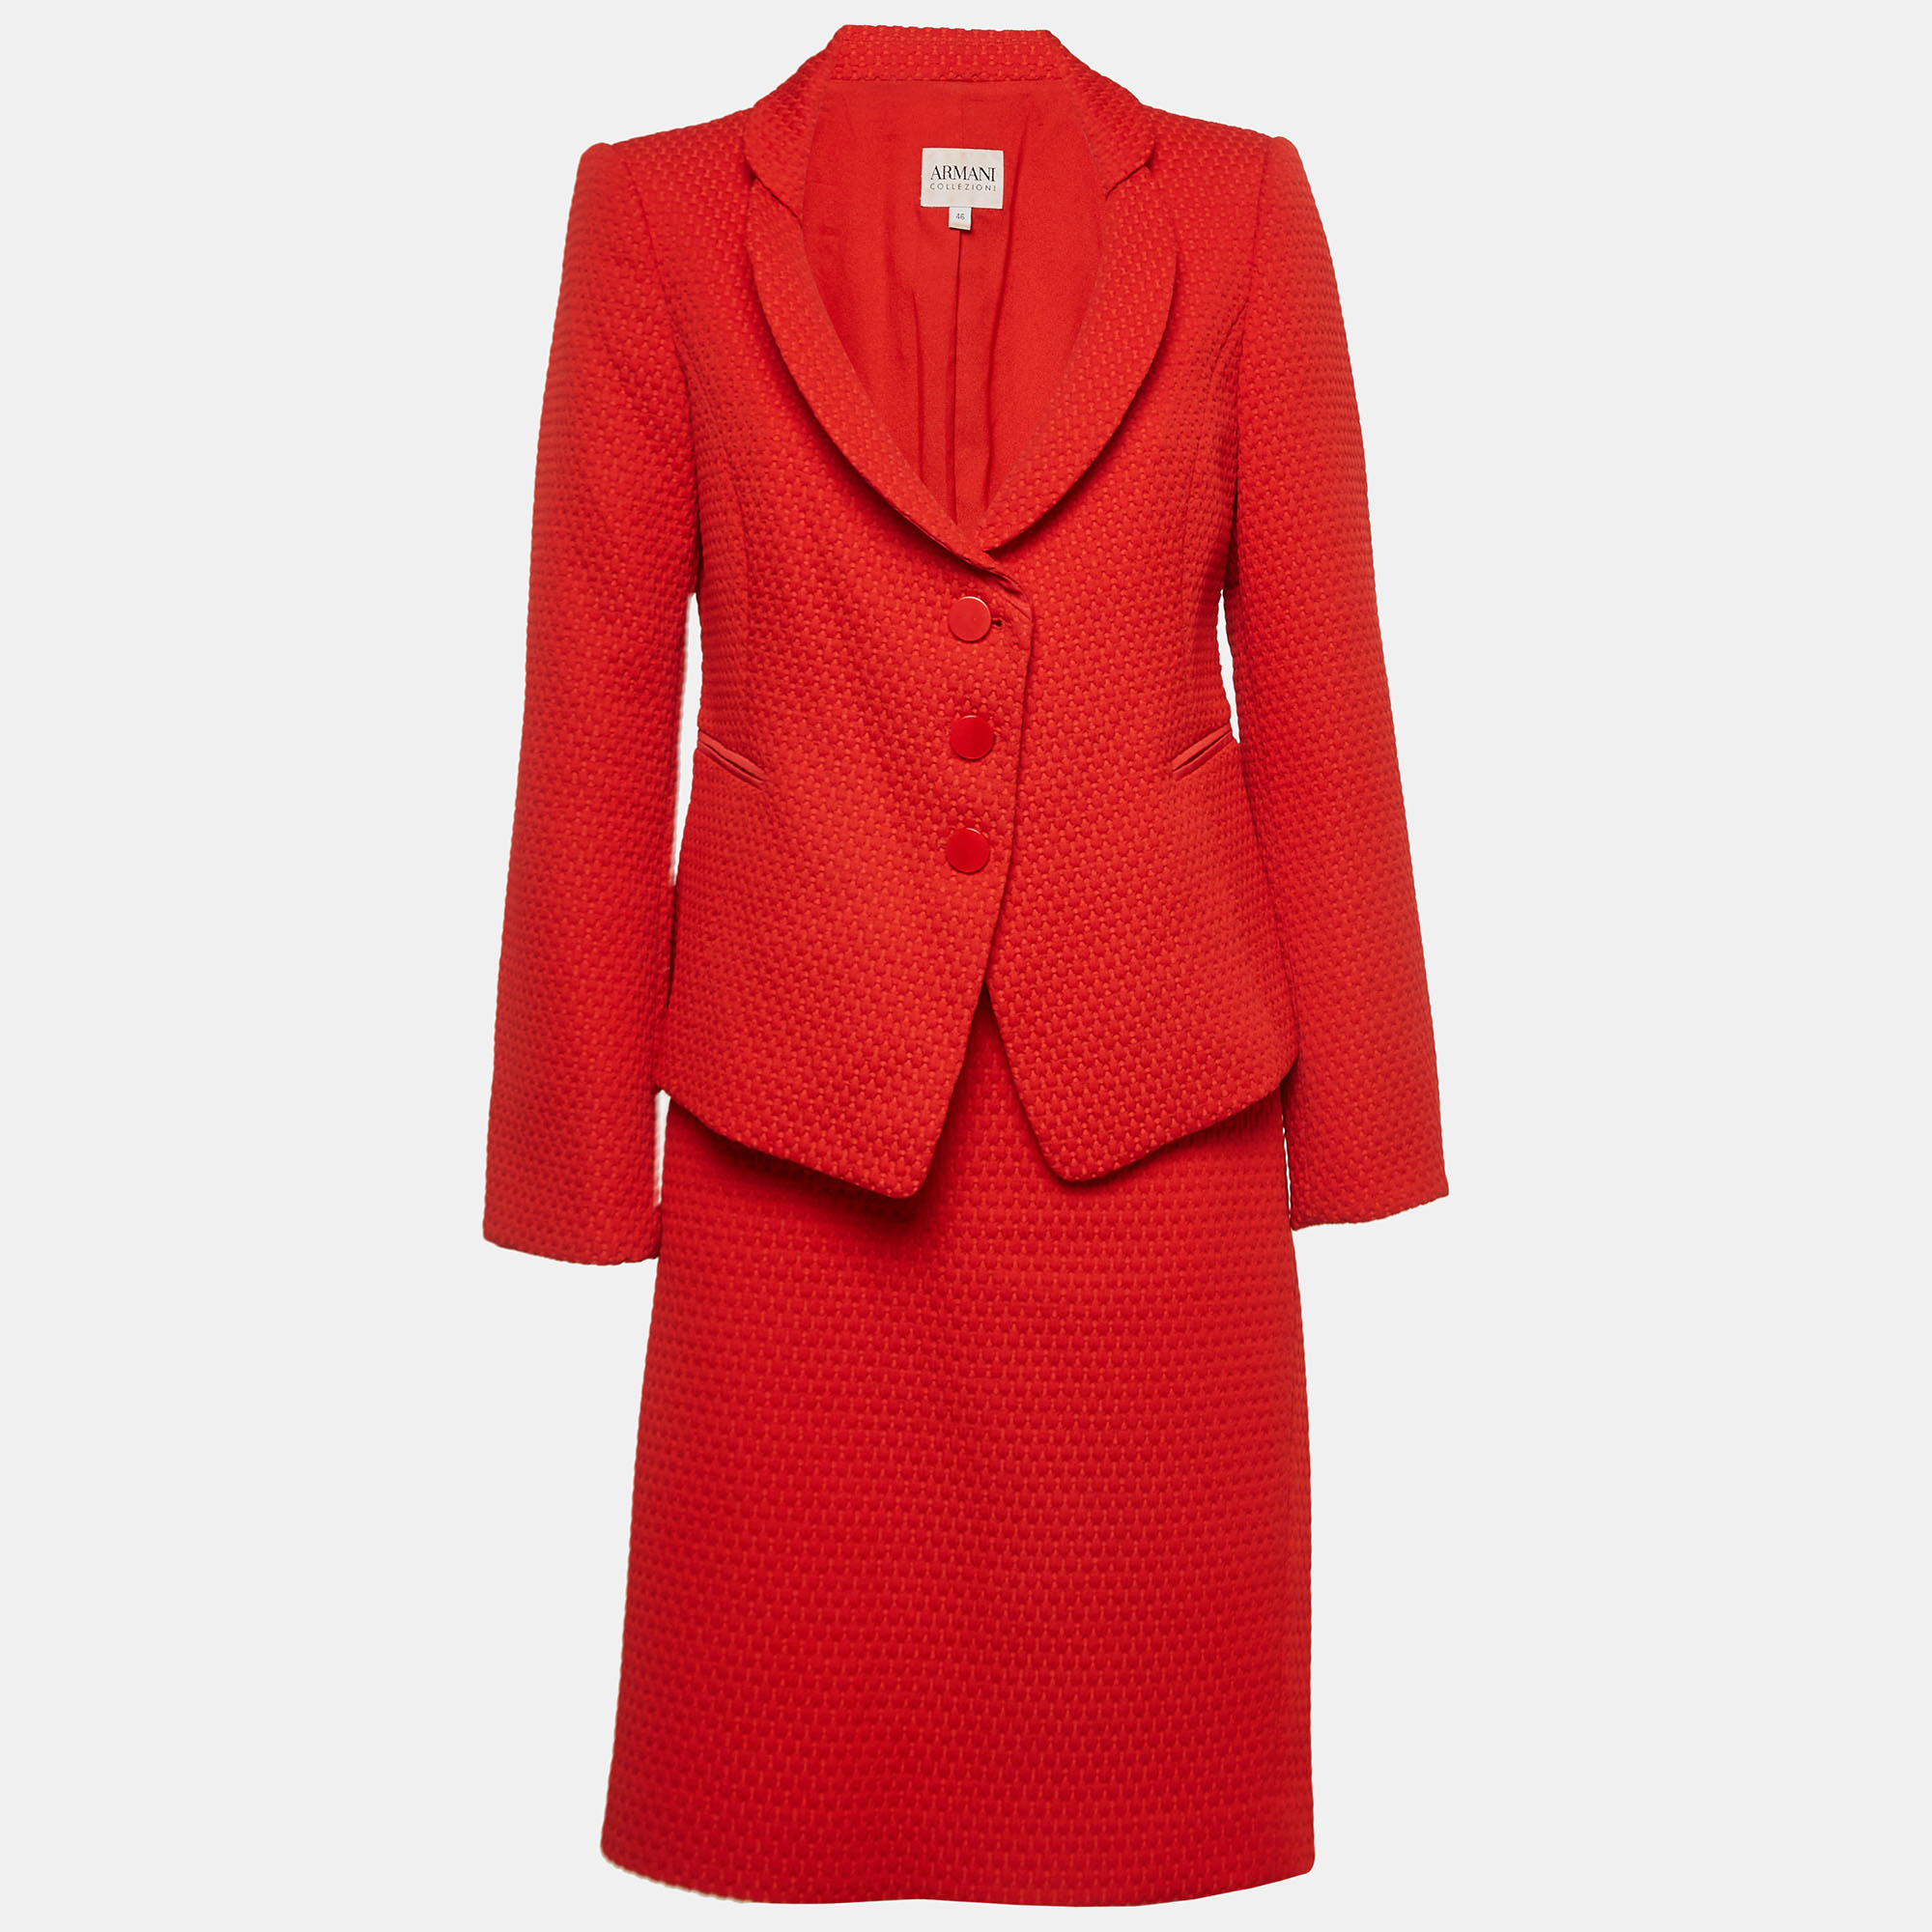 Armani Collezioni Red Knit Skirt And Blazer Set L